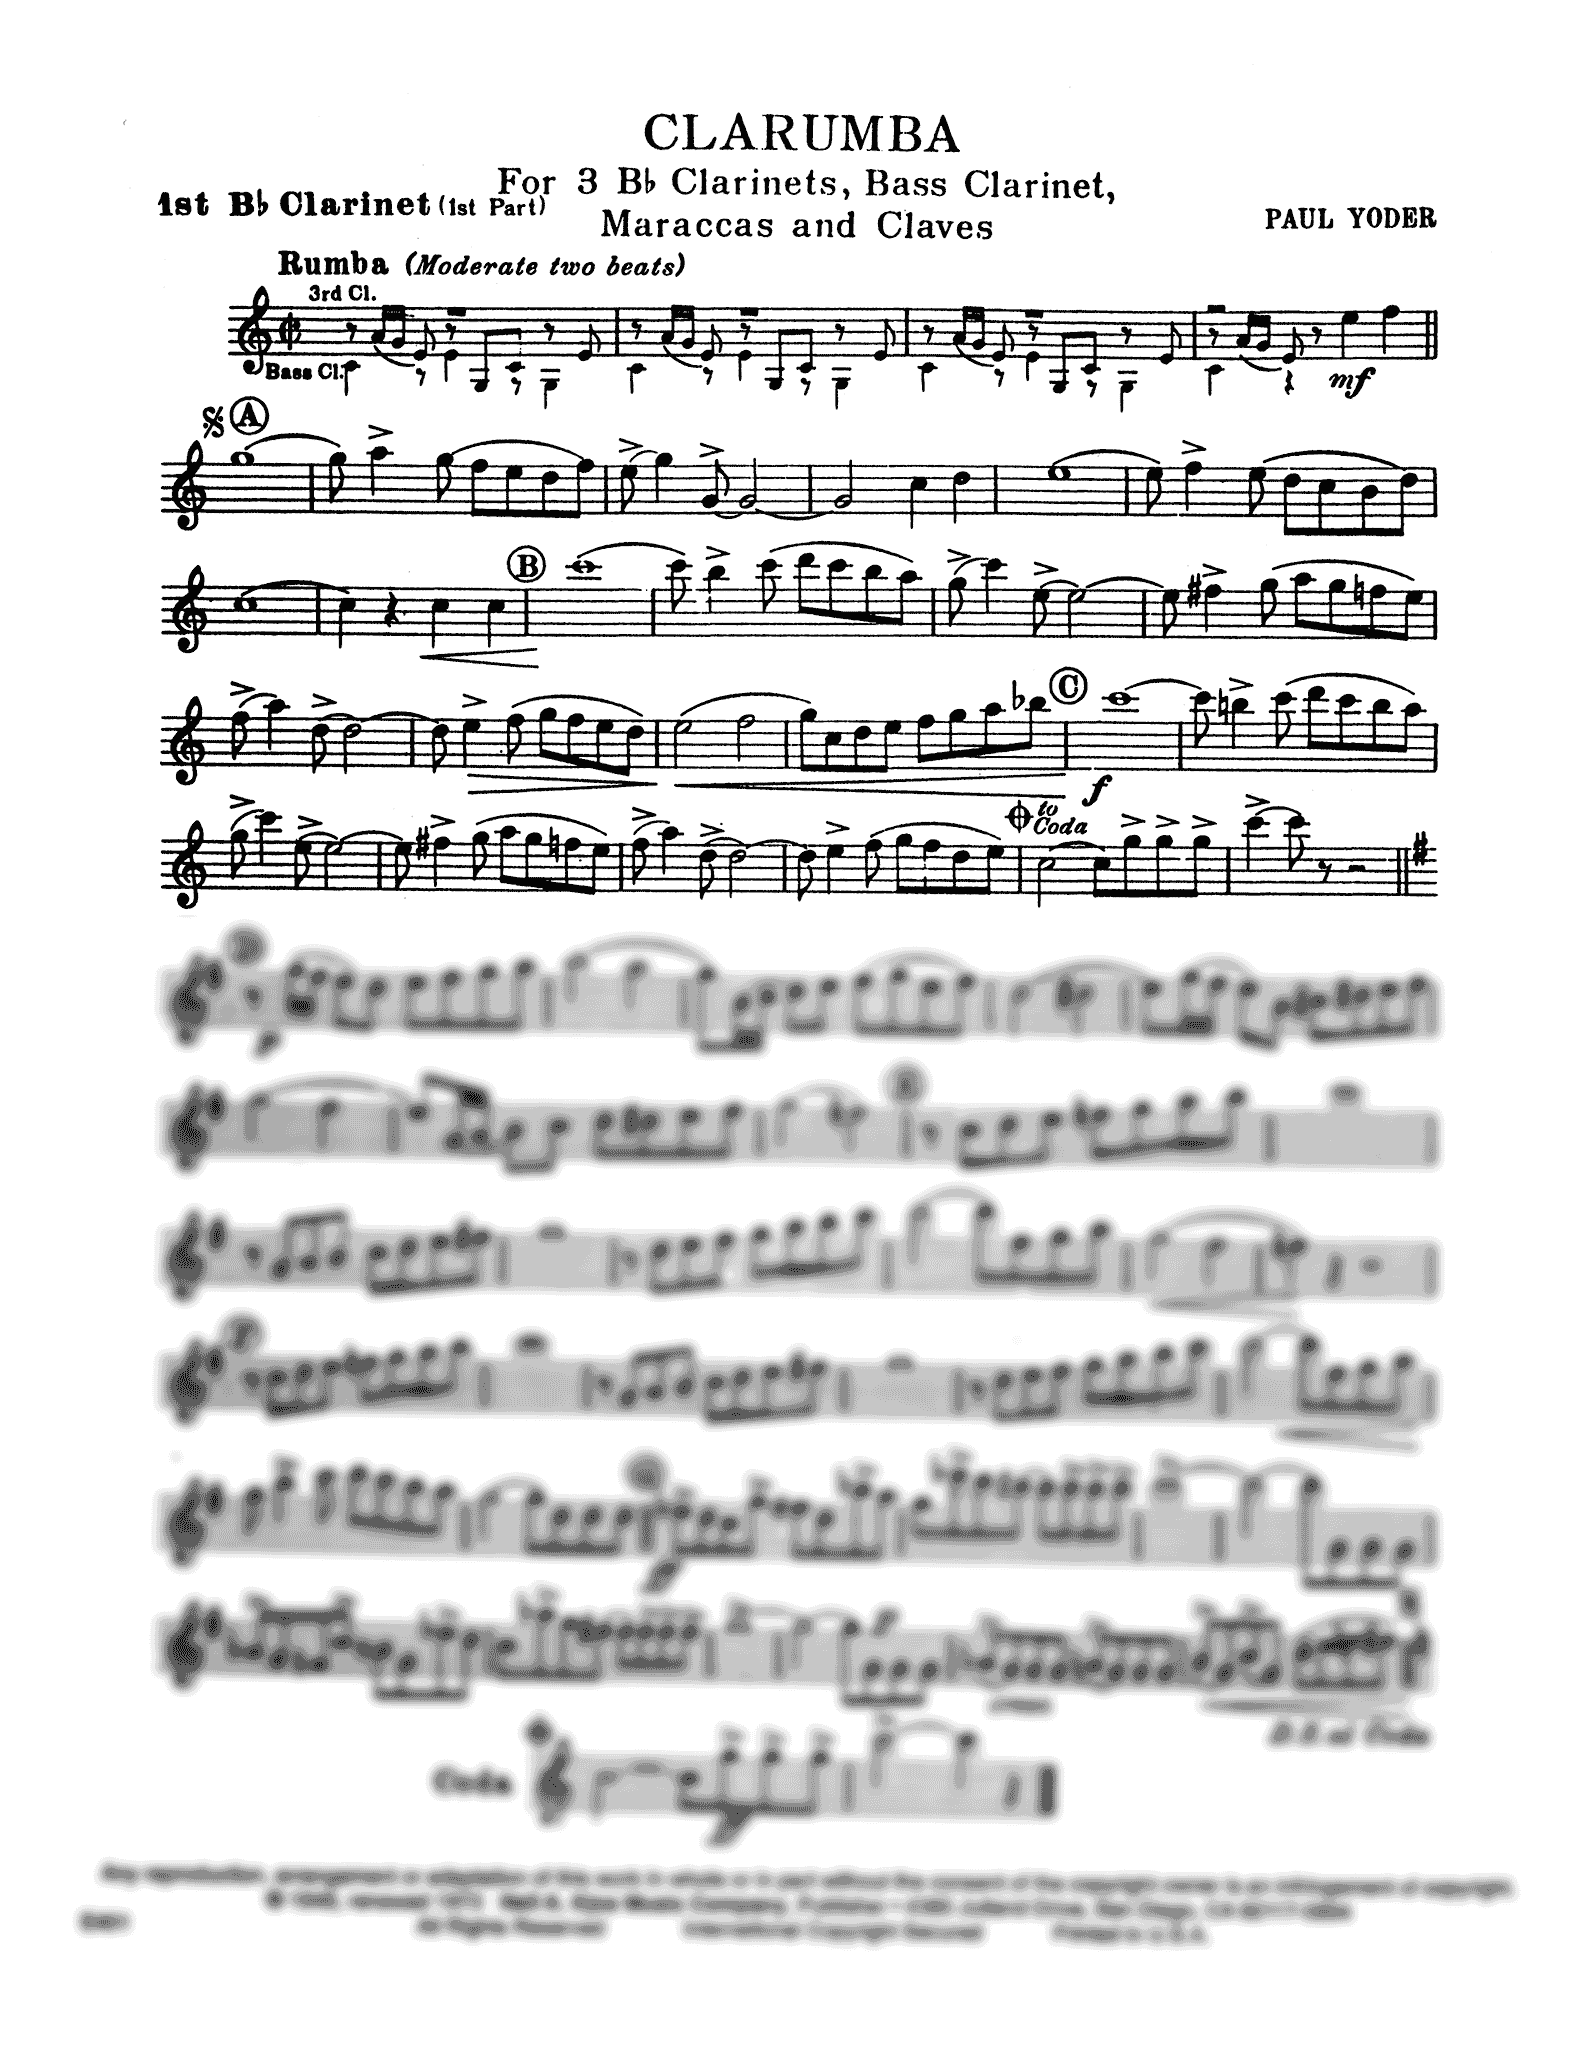 Clarumba Clarinet part